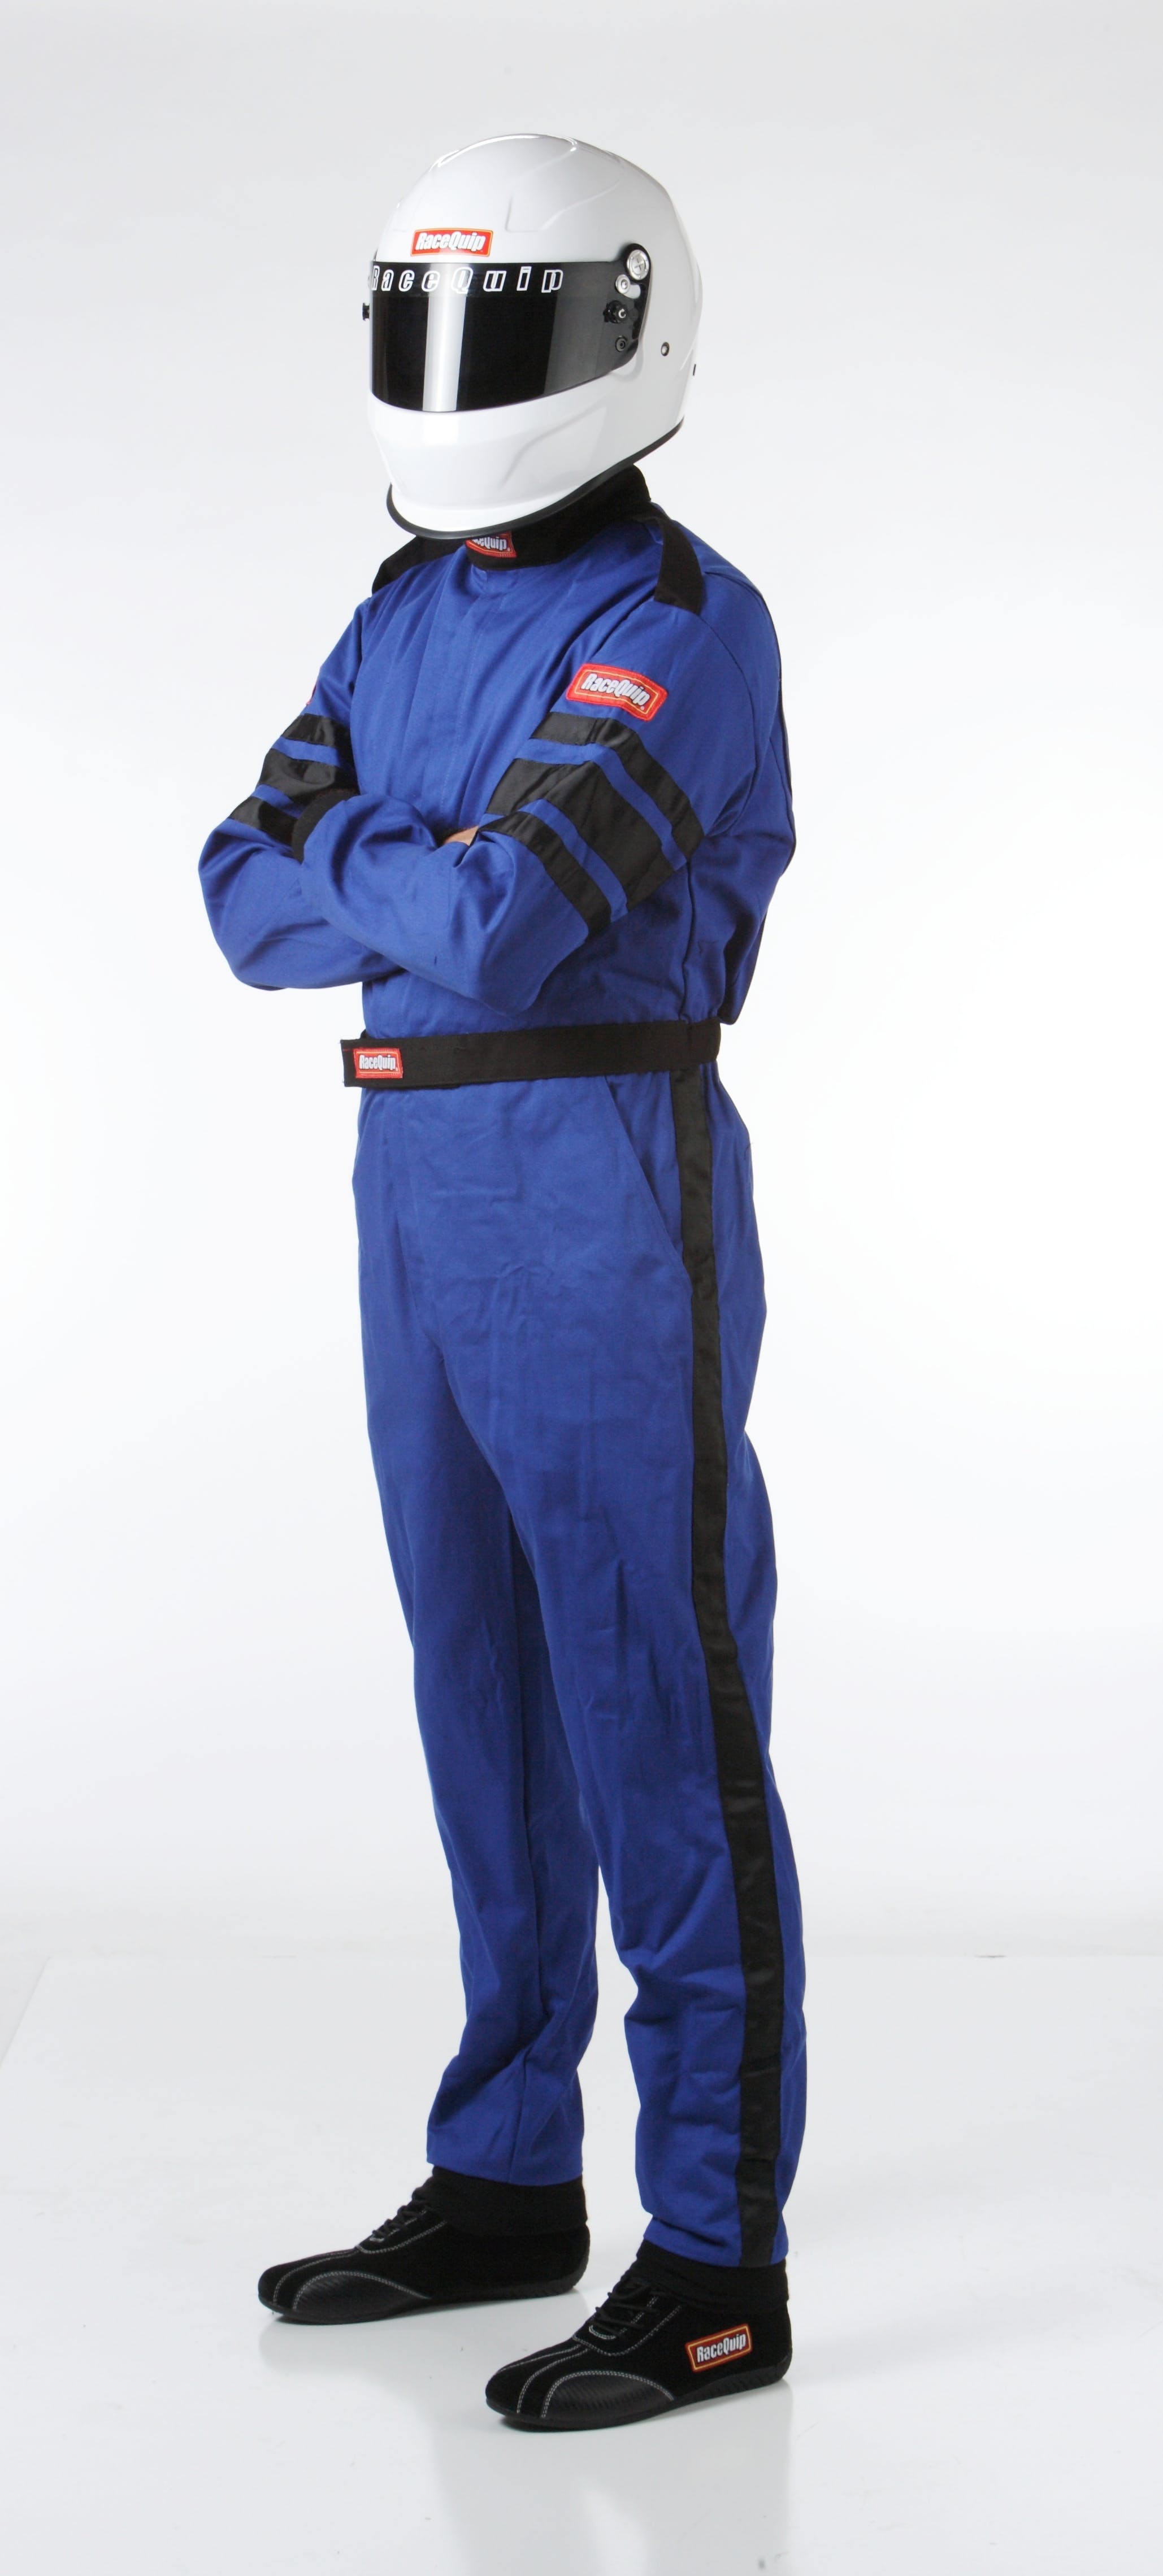 RaceQuip 110023 SFI-1 Pyrovatex One-Piece Single-Layer Racing Fire Suit (Blue, Medium)